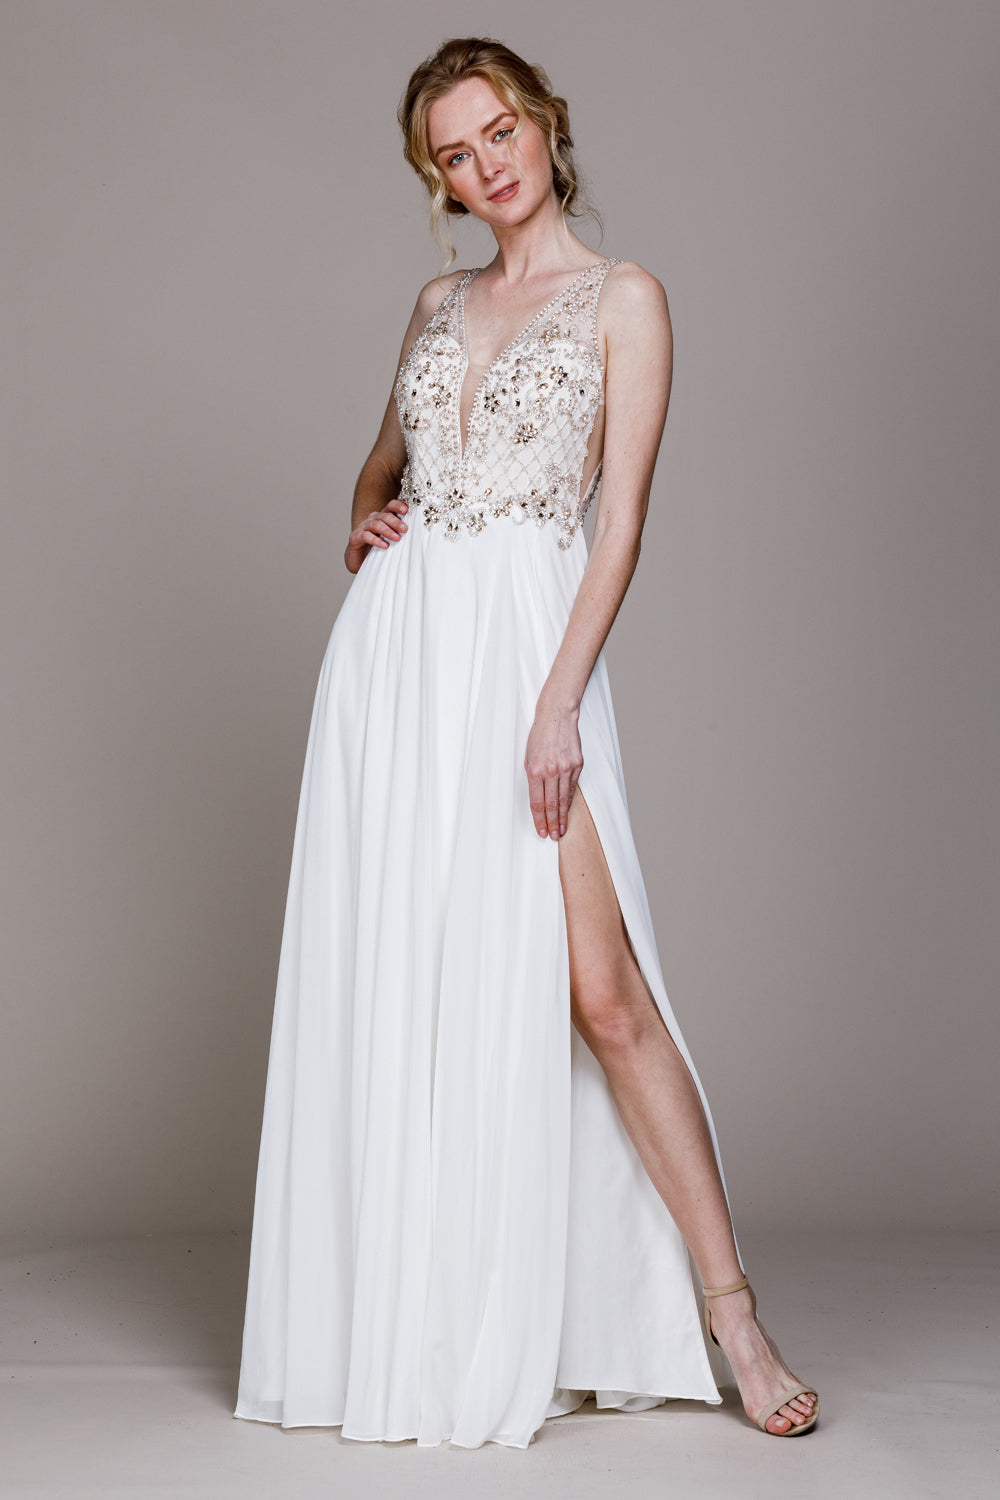 Embroidered Bodice Side Slit Long Wedding Dress AC590 Elsy Style Wedding Dress